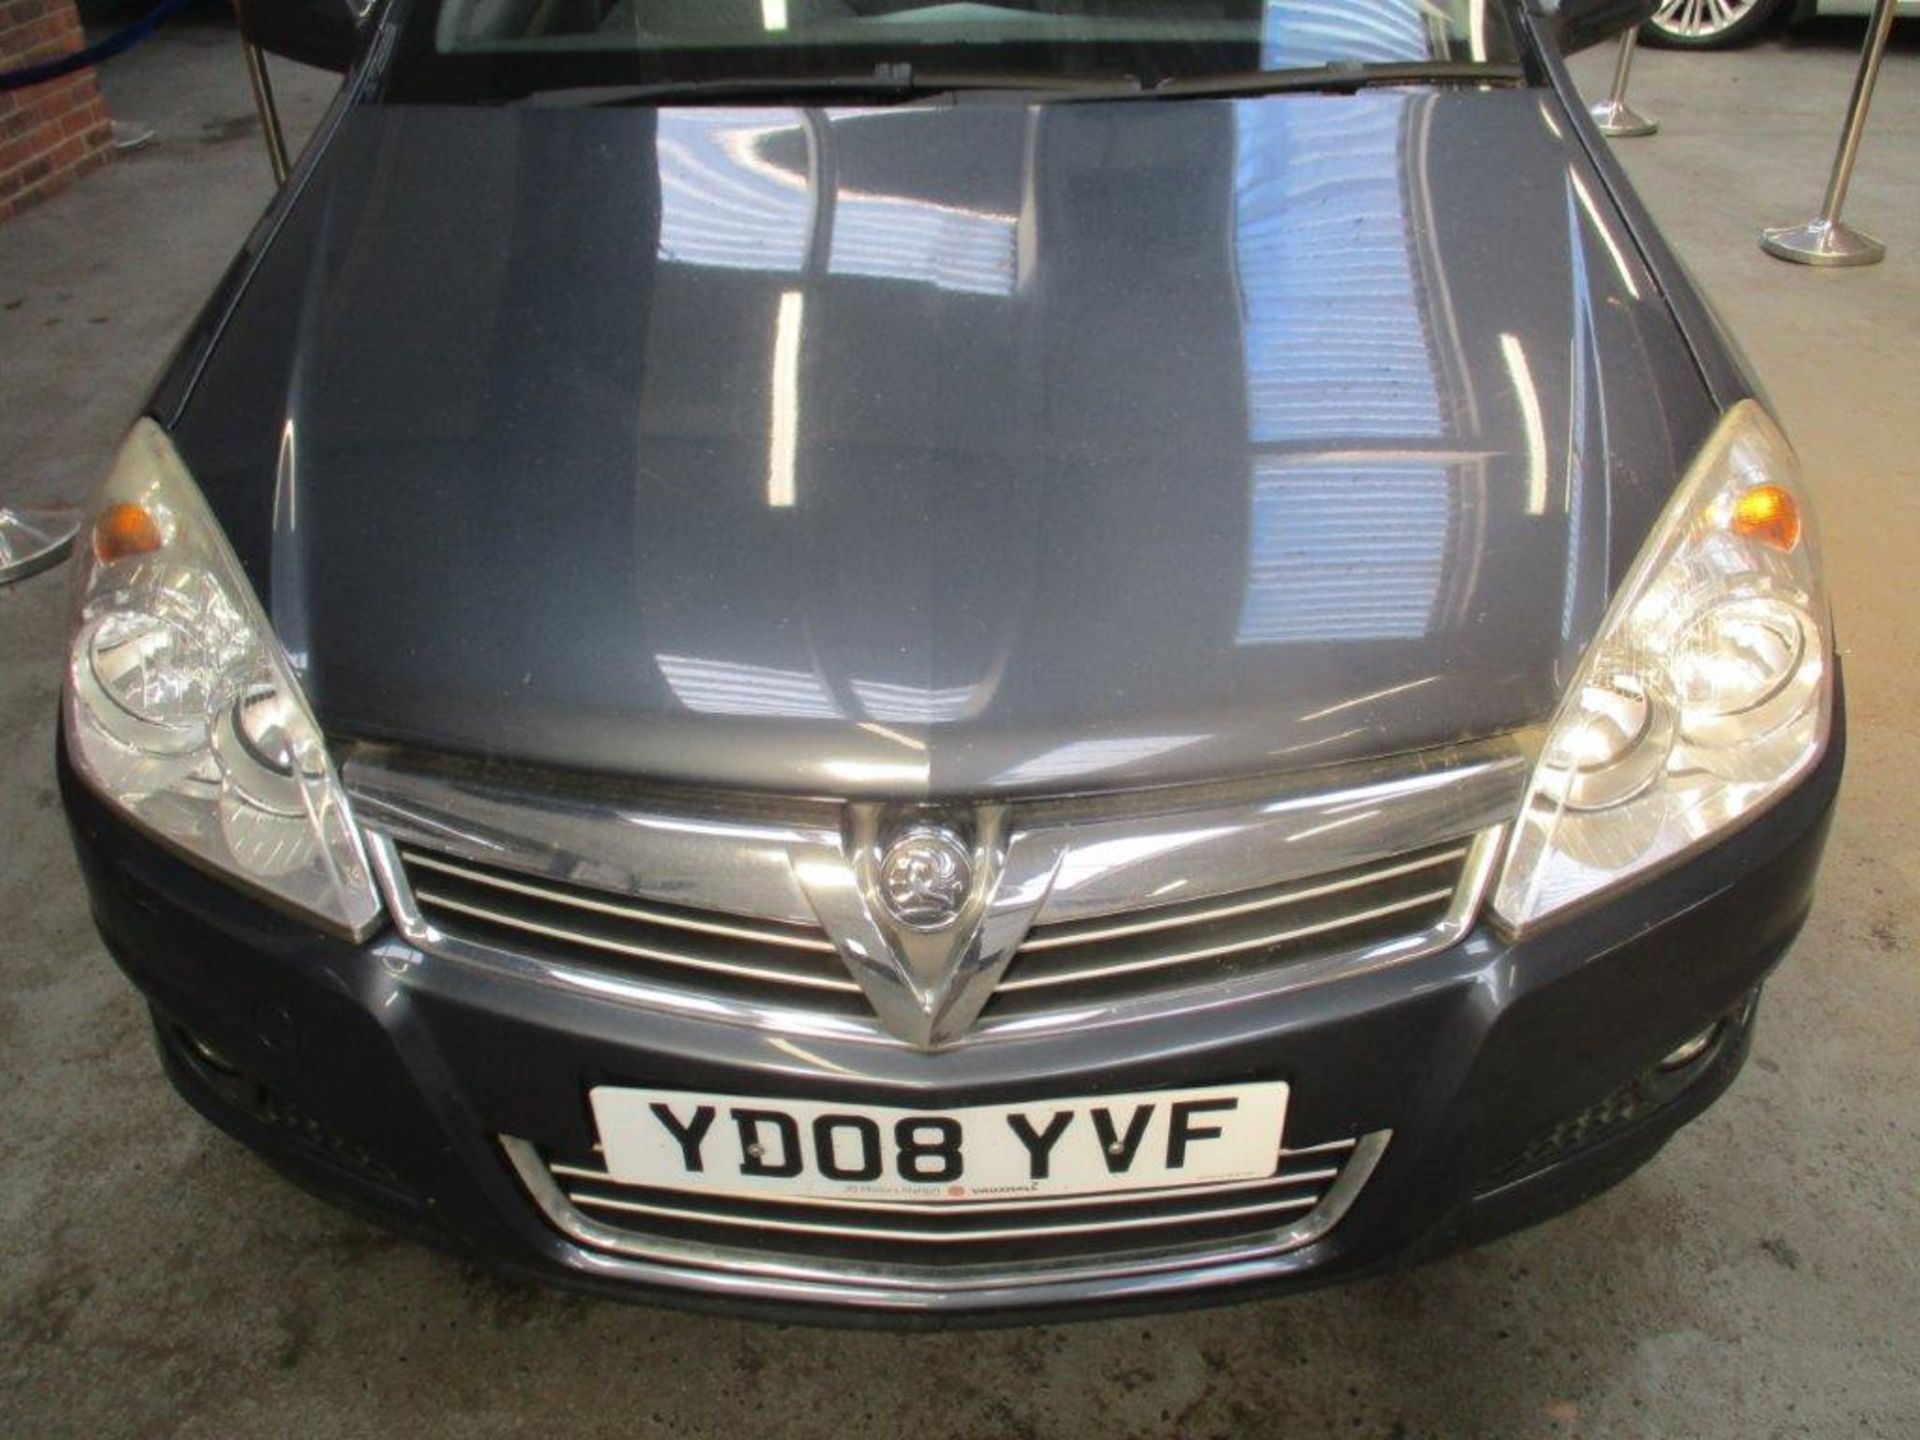 08 08 Vauxhall Astra Breeze - Image 3 of 18